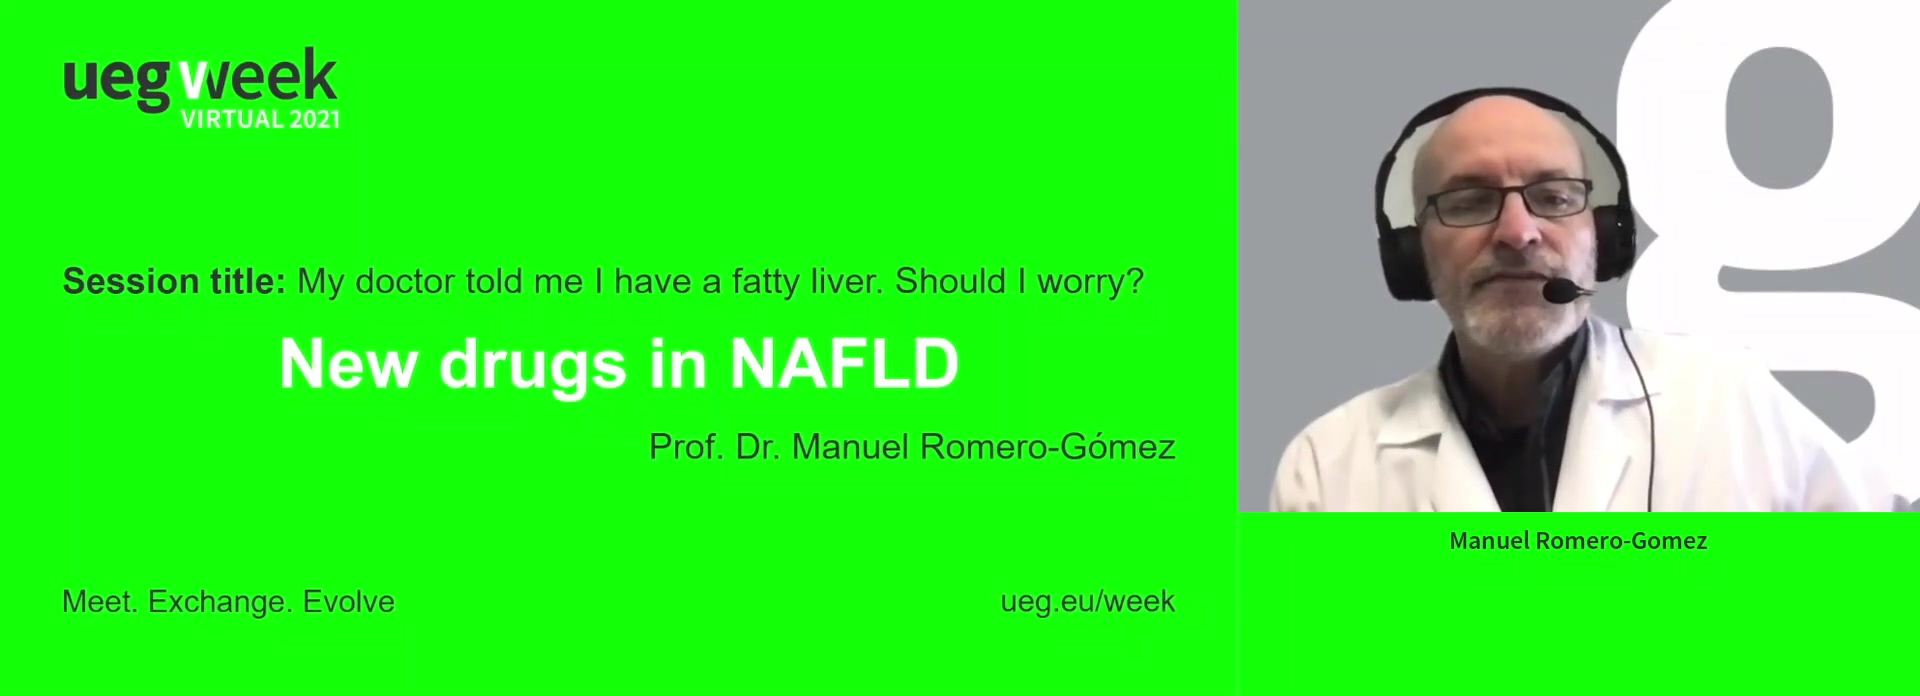 New drugs in NAFLD?